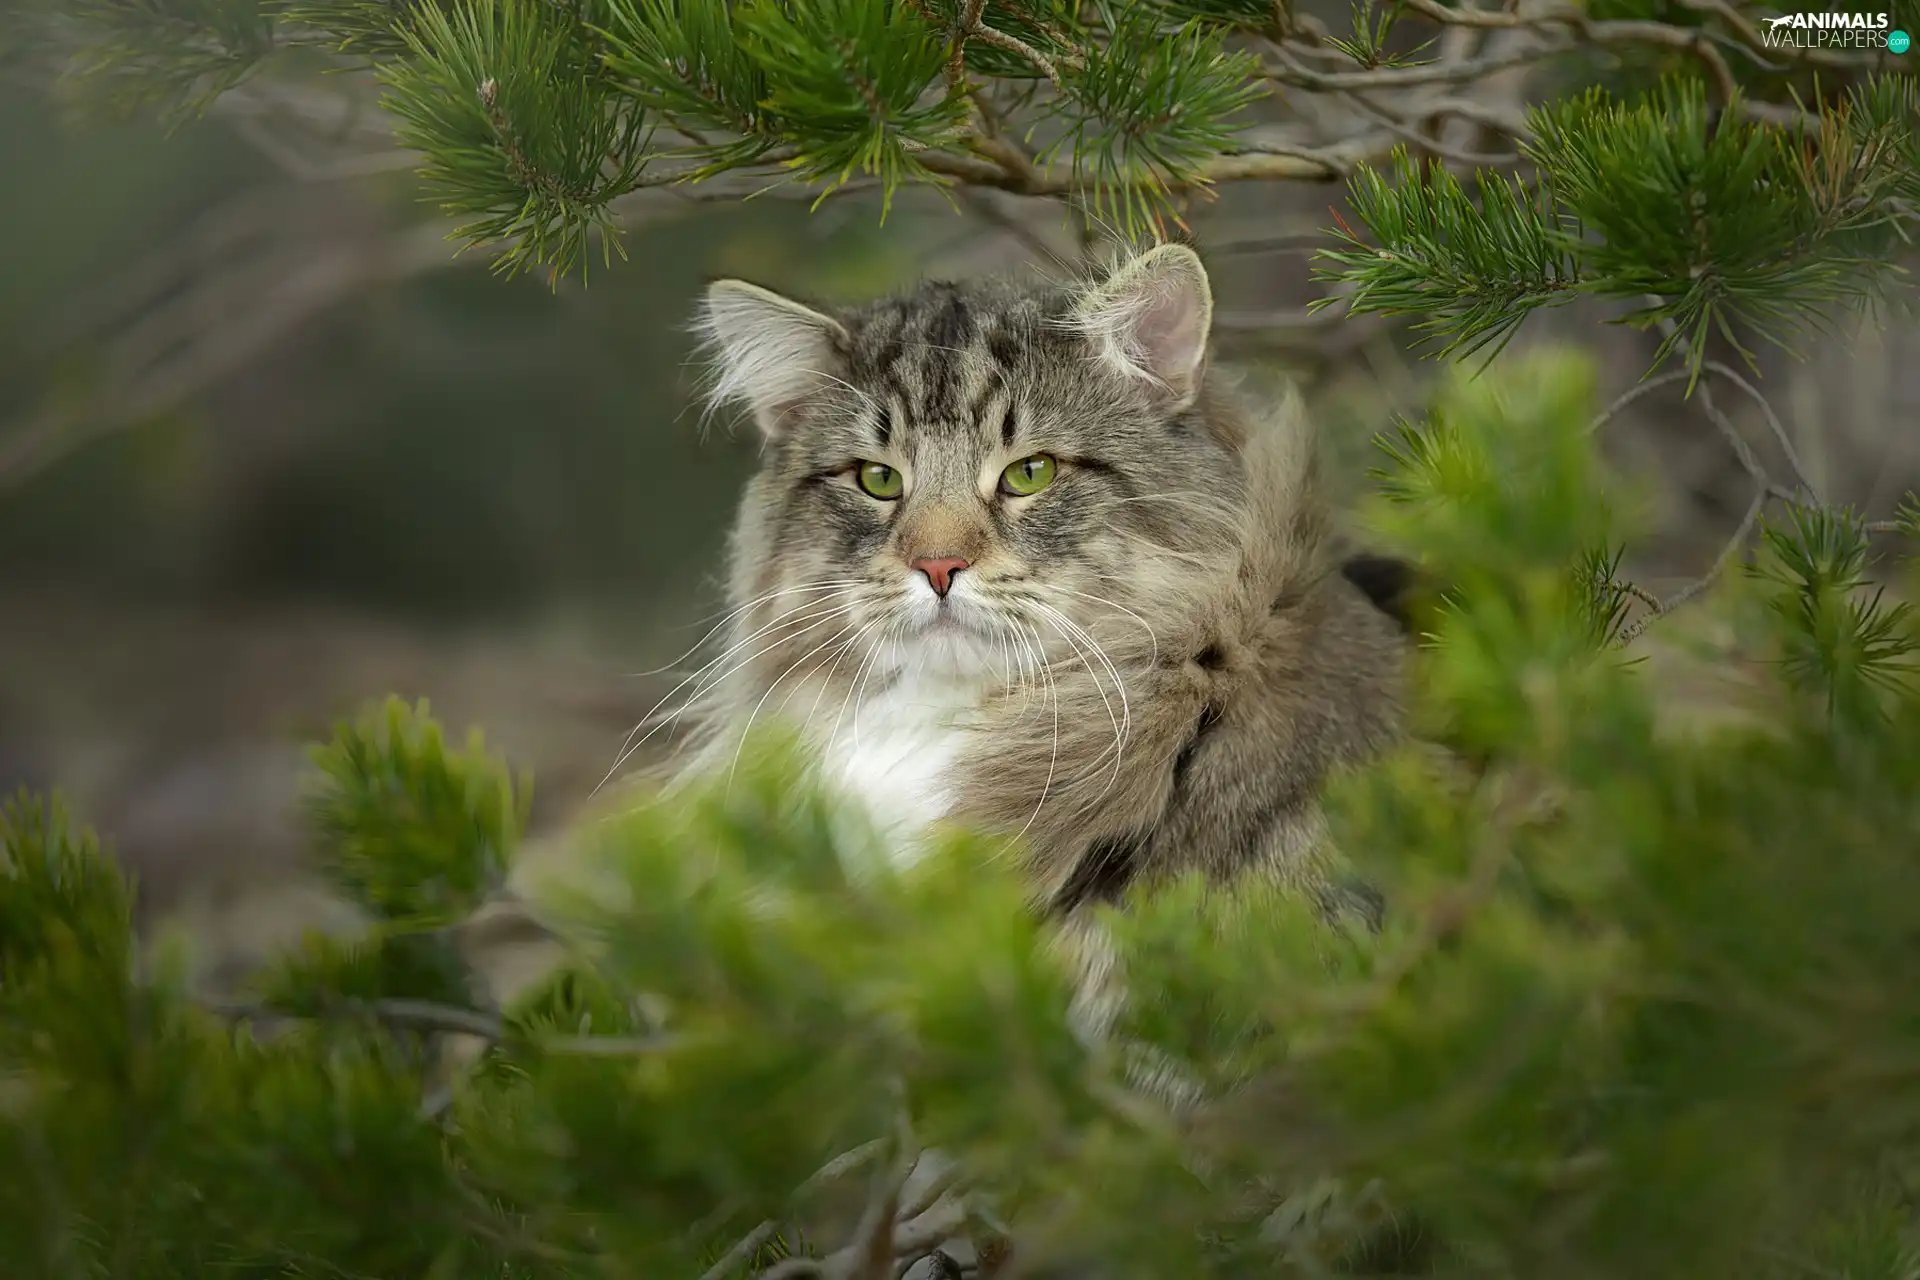 Eyes, branch pics, The look, green ones, Norwegian Forest Cat